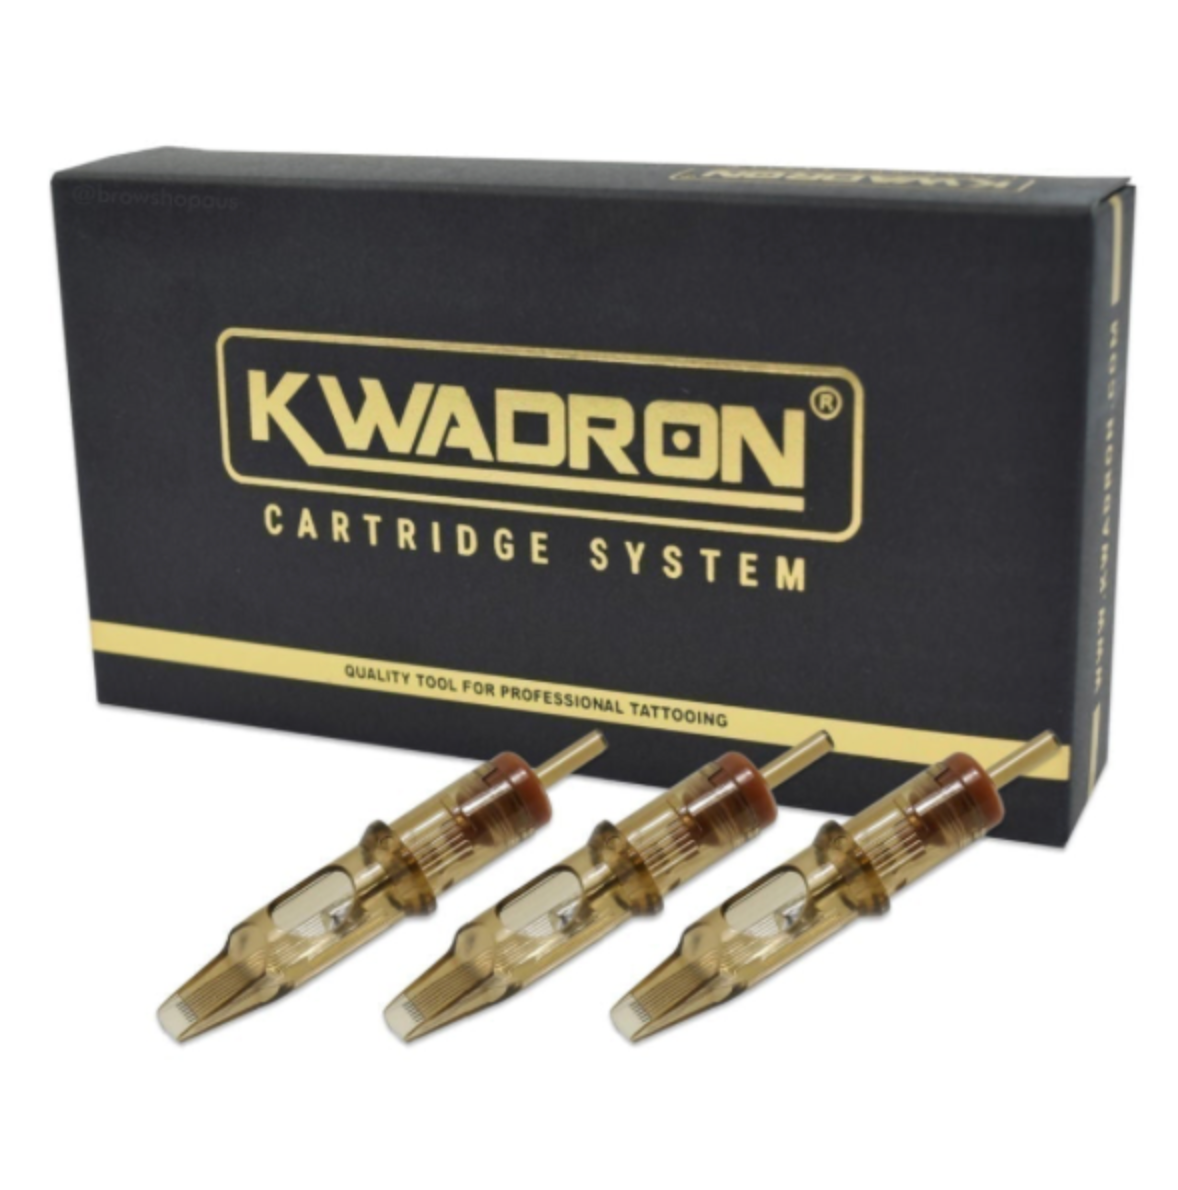 Kwadron Cartridge Needles - 5 Round Liner Long Taper - 35/5RLLT